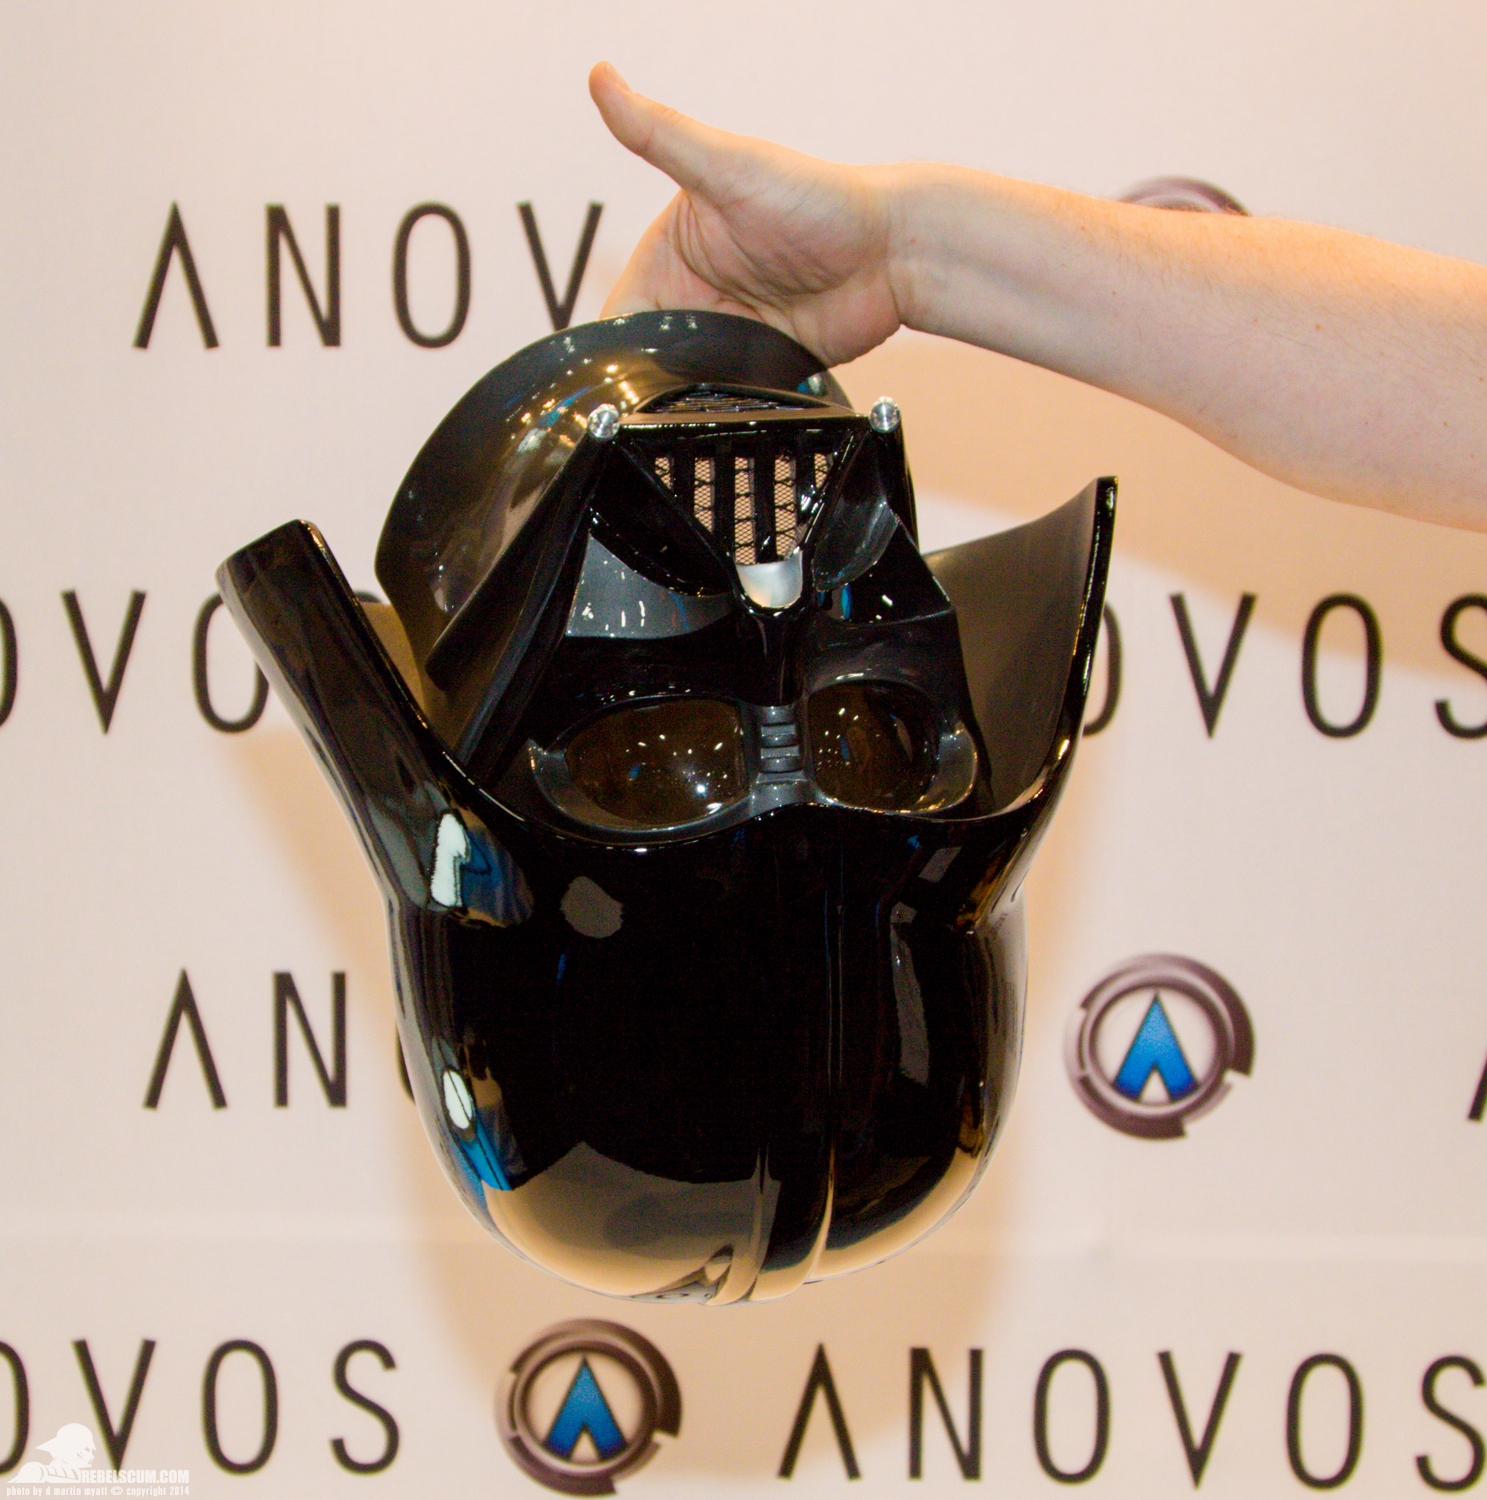 SDCC-2014-Anovos-Star-Wars-1-003.jpg